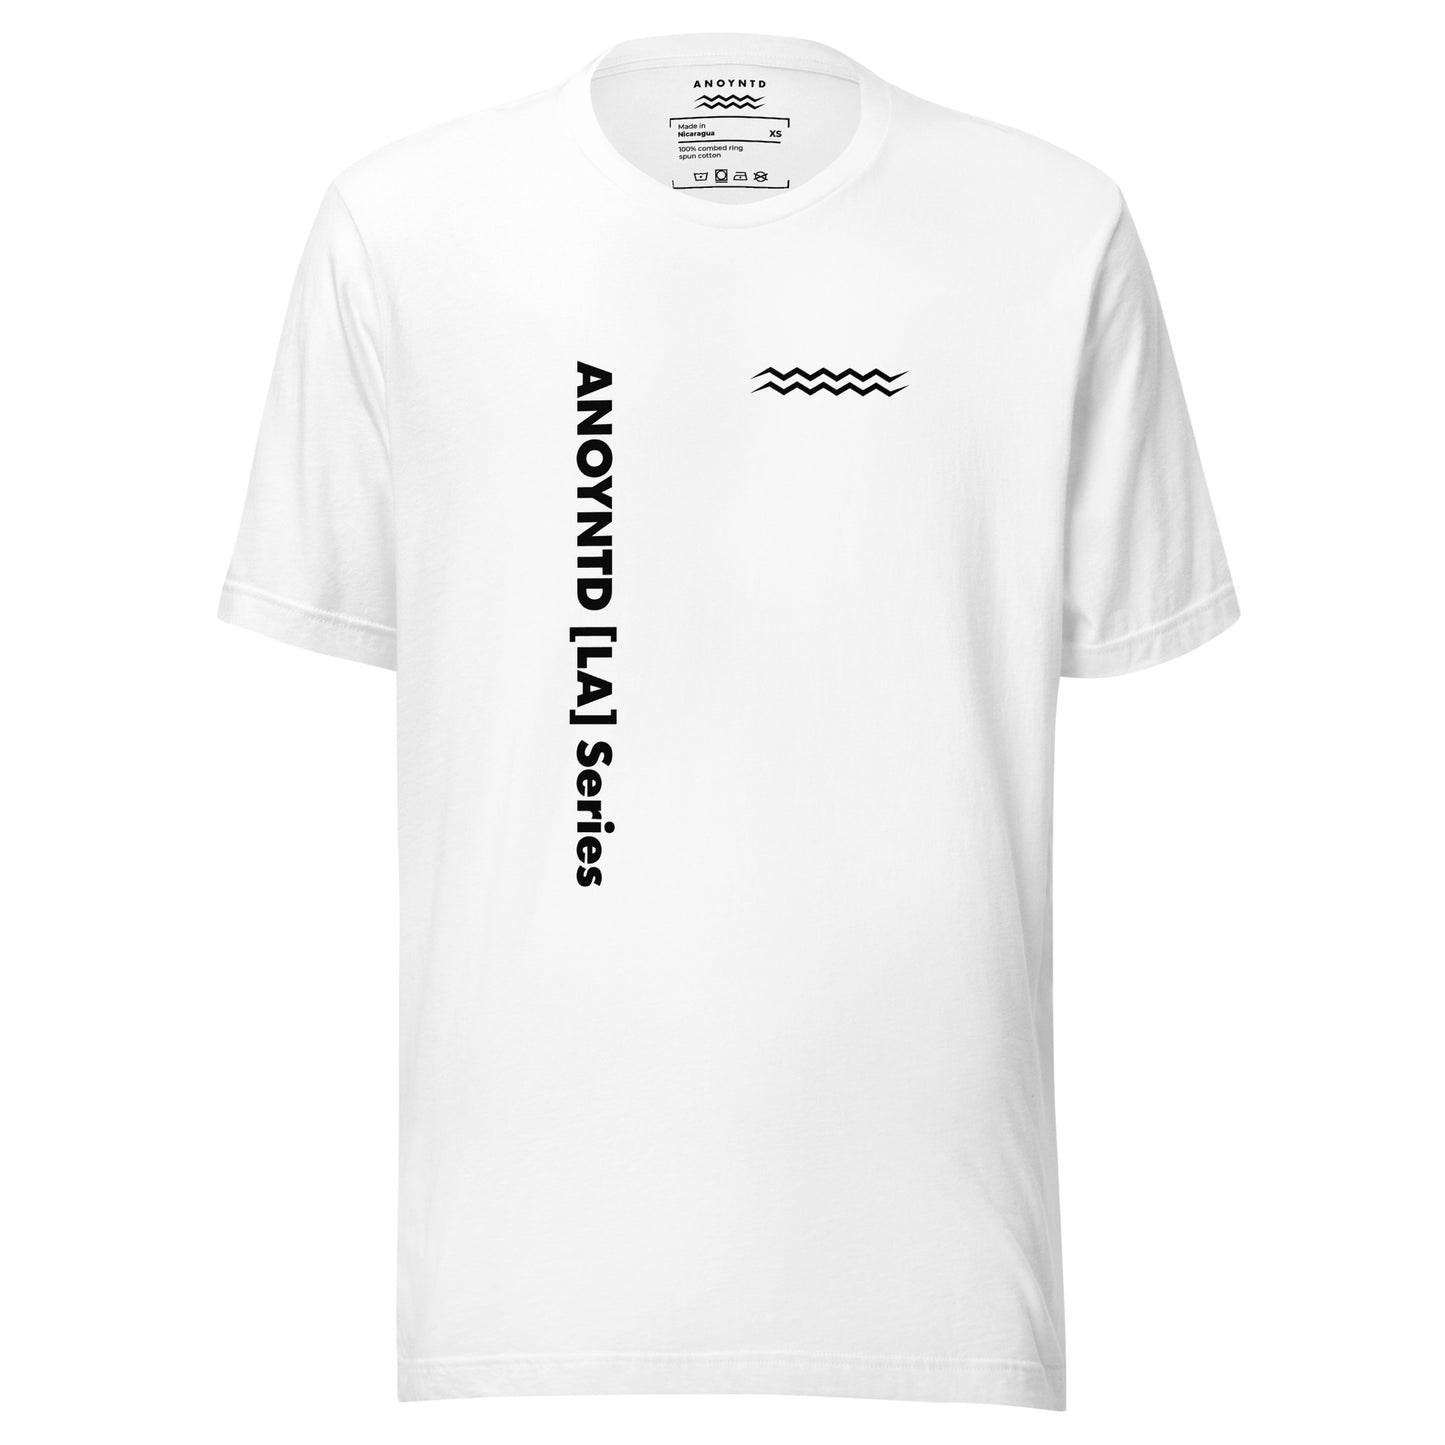 ANOYNTD [LA] Series Unisex t-shirt